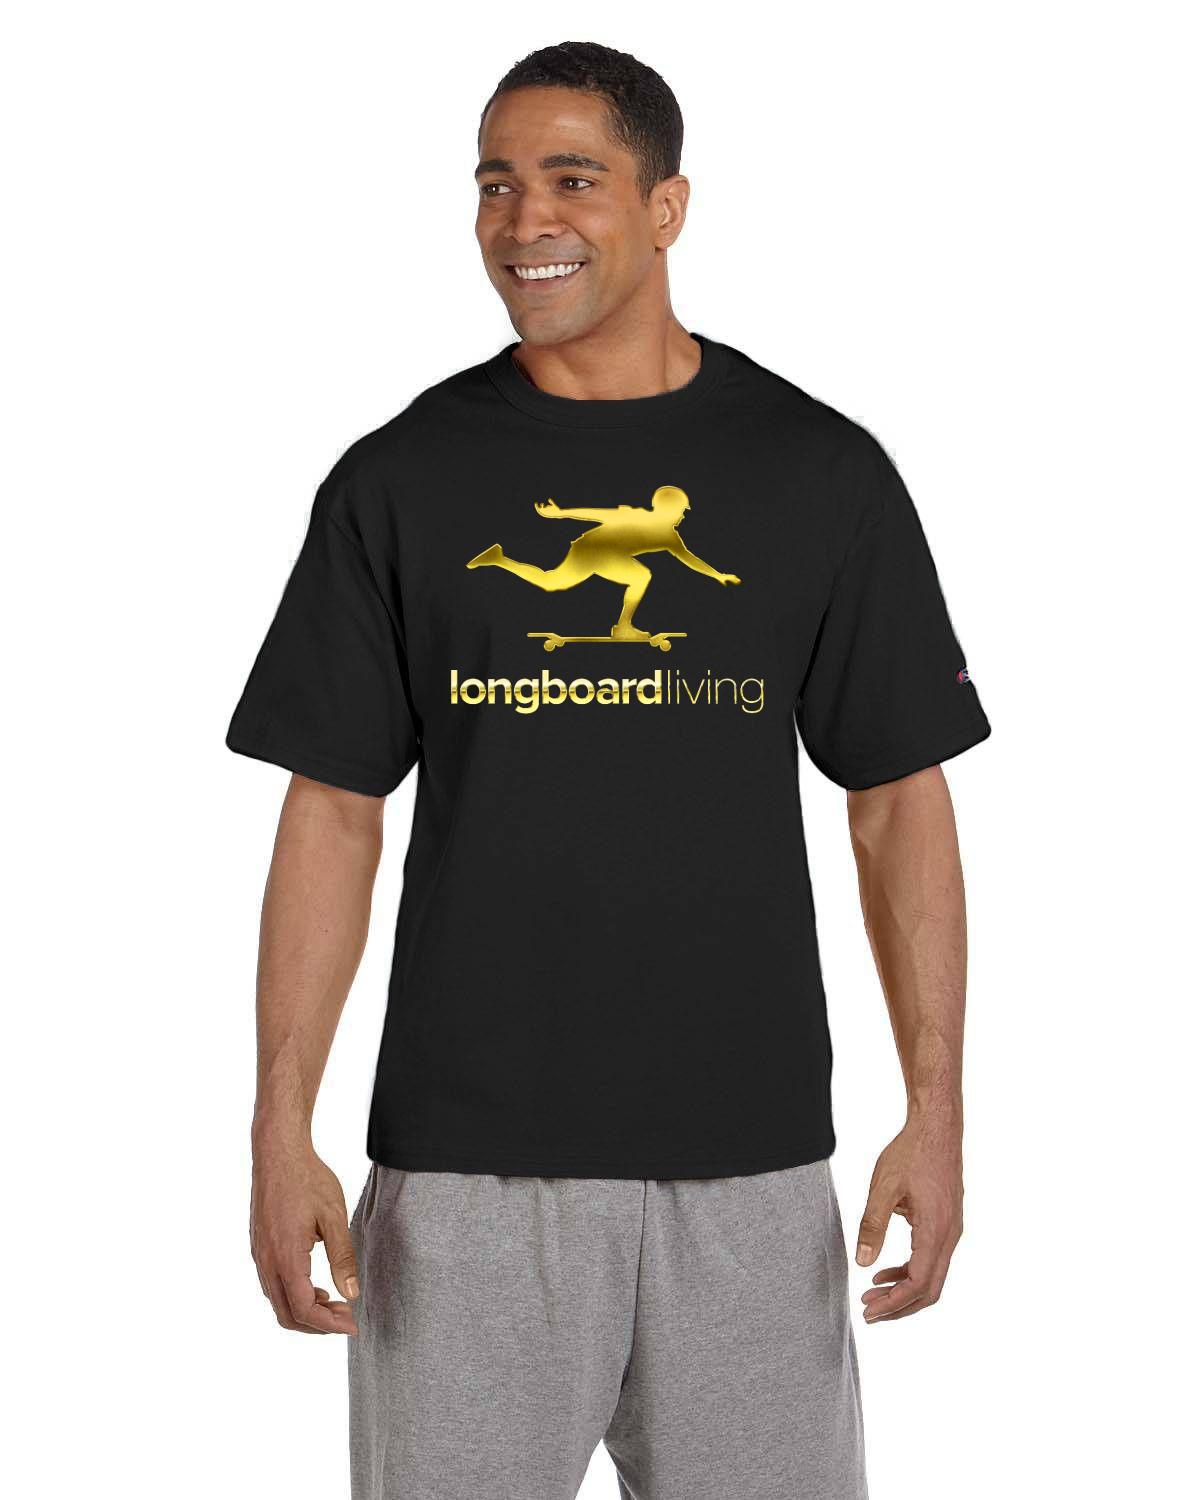 Longboard Living Gold print on black Shirt